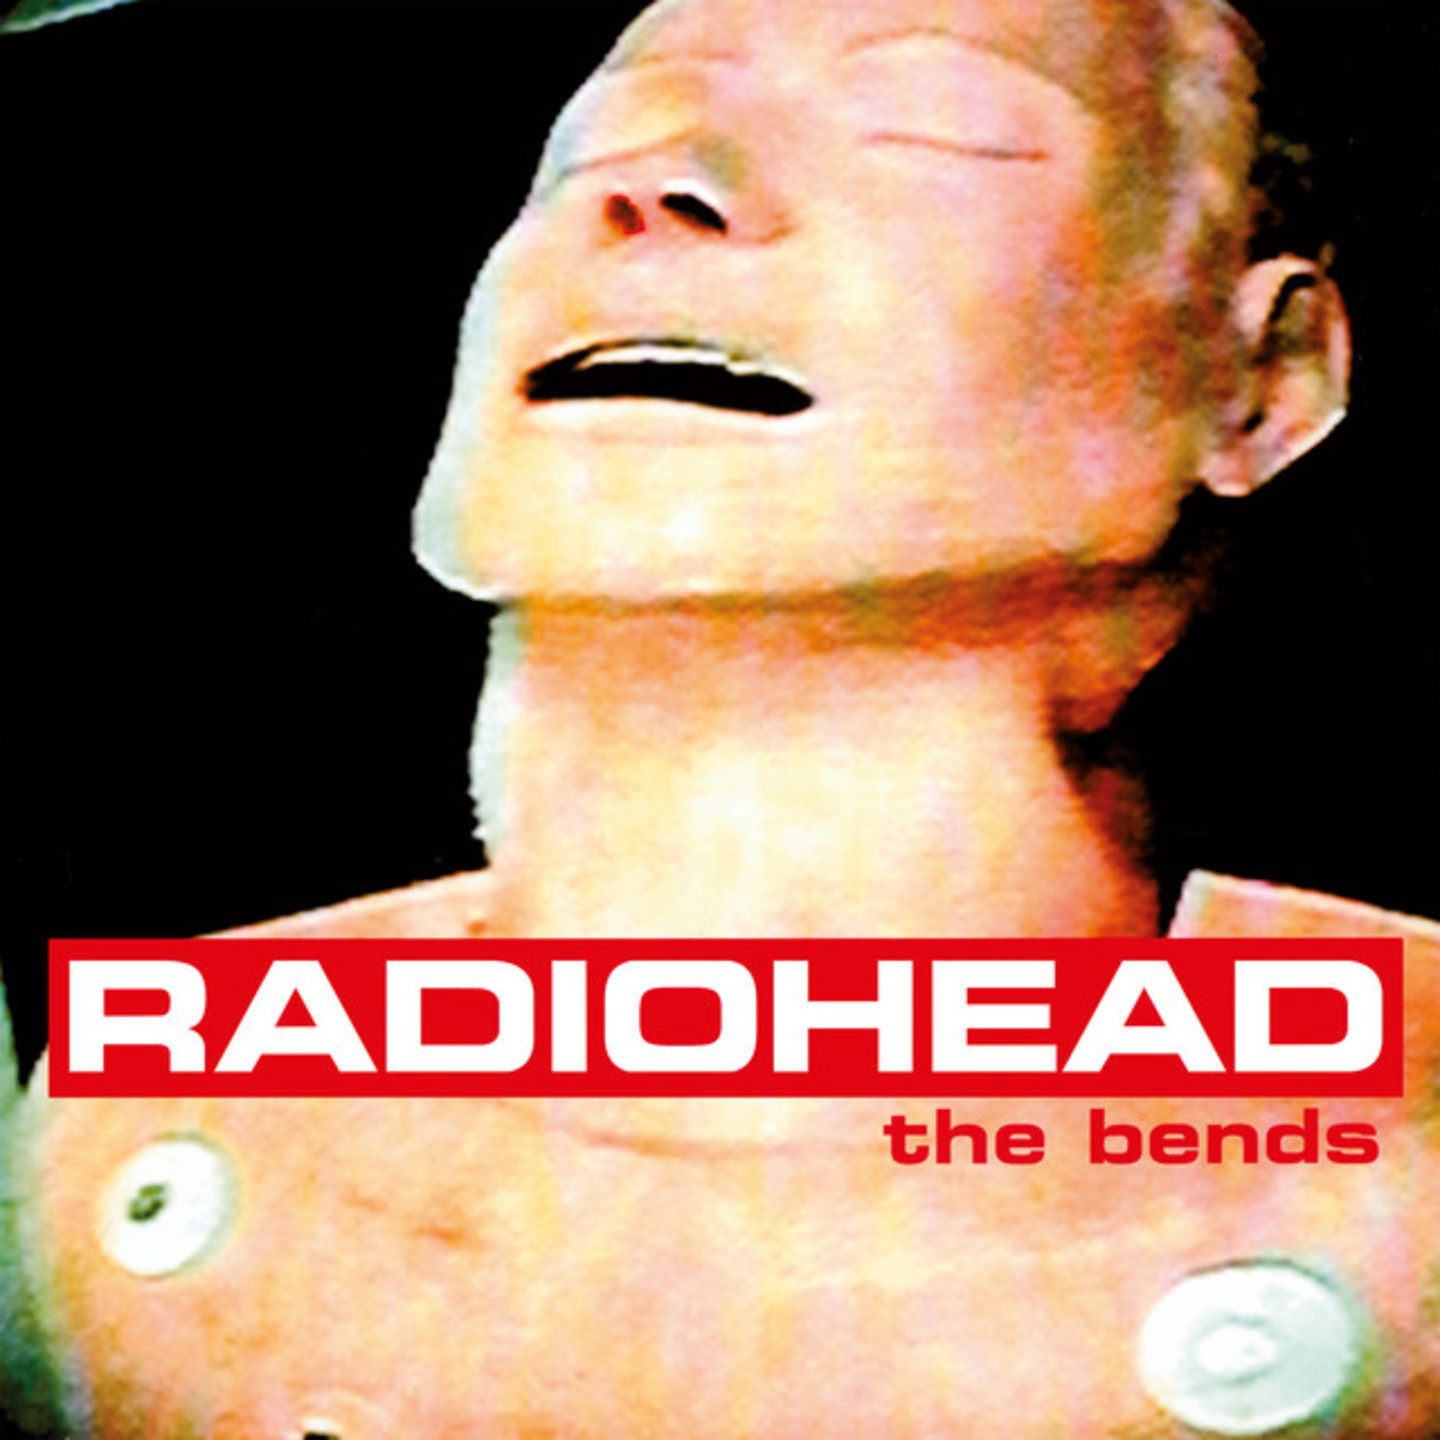 RADIOHEAD - The Bends LP (180gram vinyl)